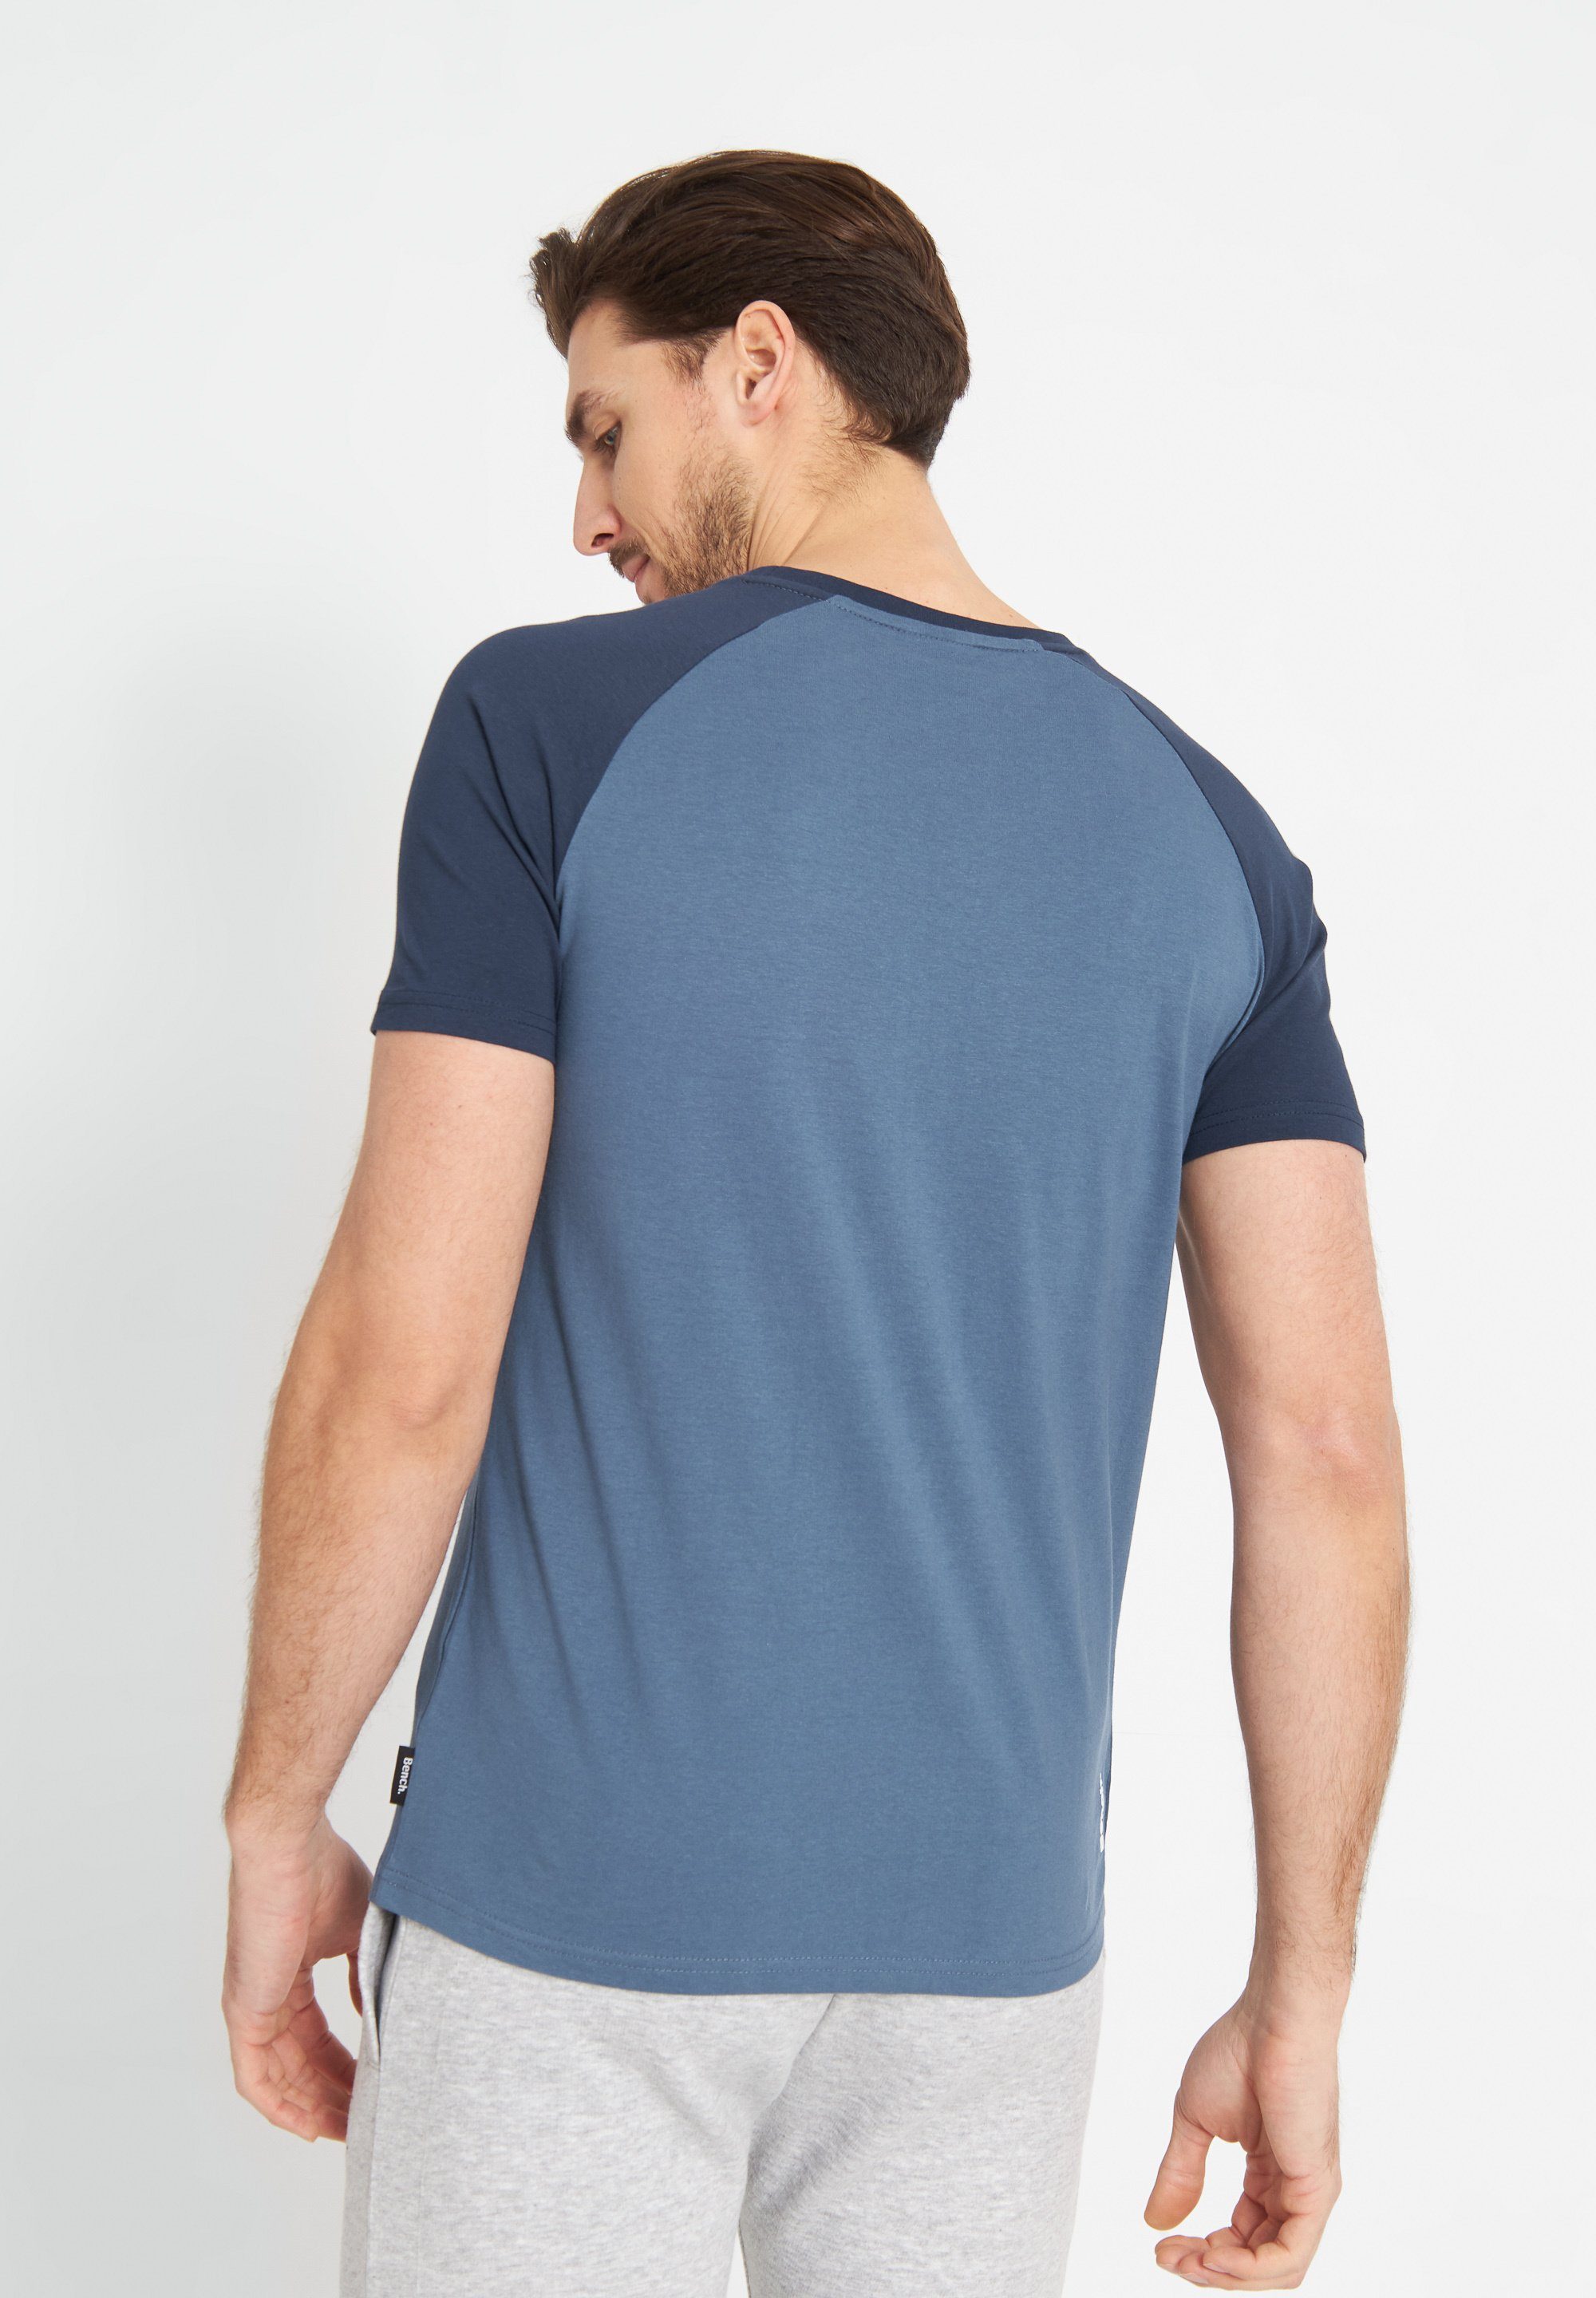 Angabe Denim T-Shirt Keine Rockwell Bench. blue